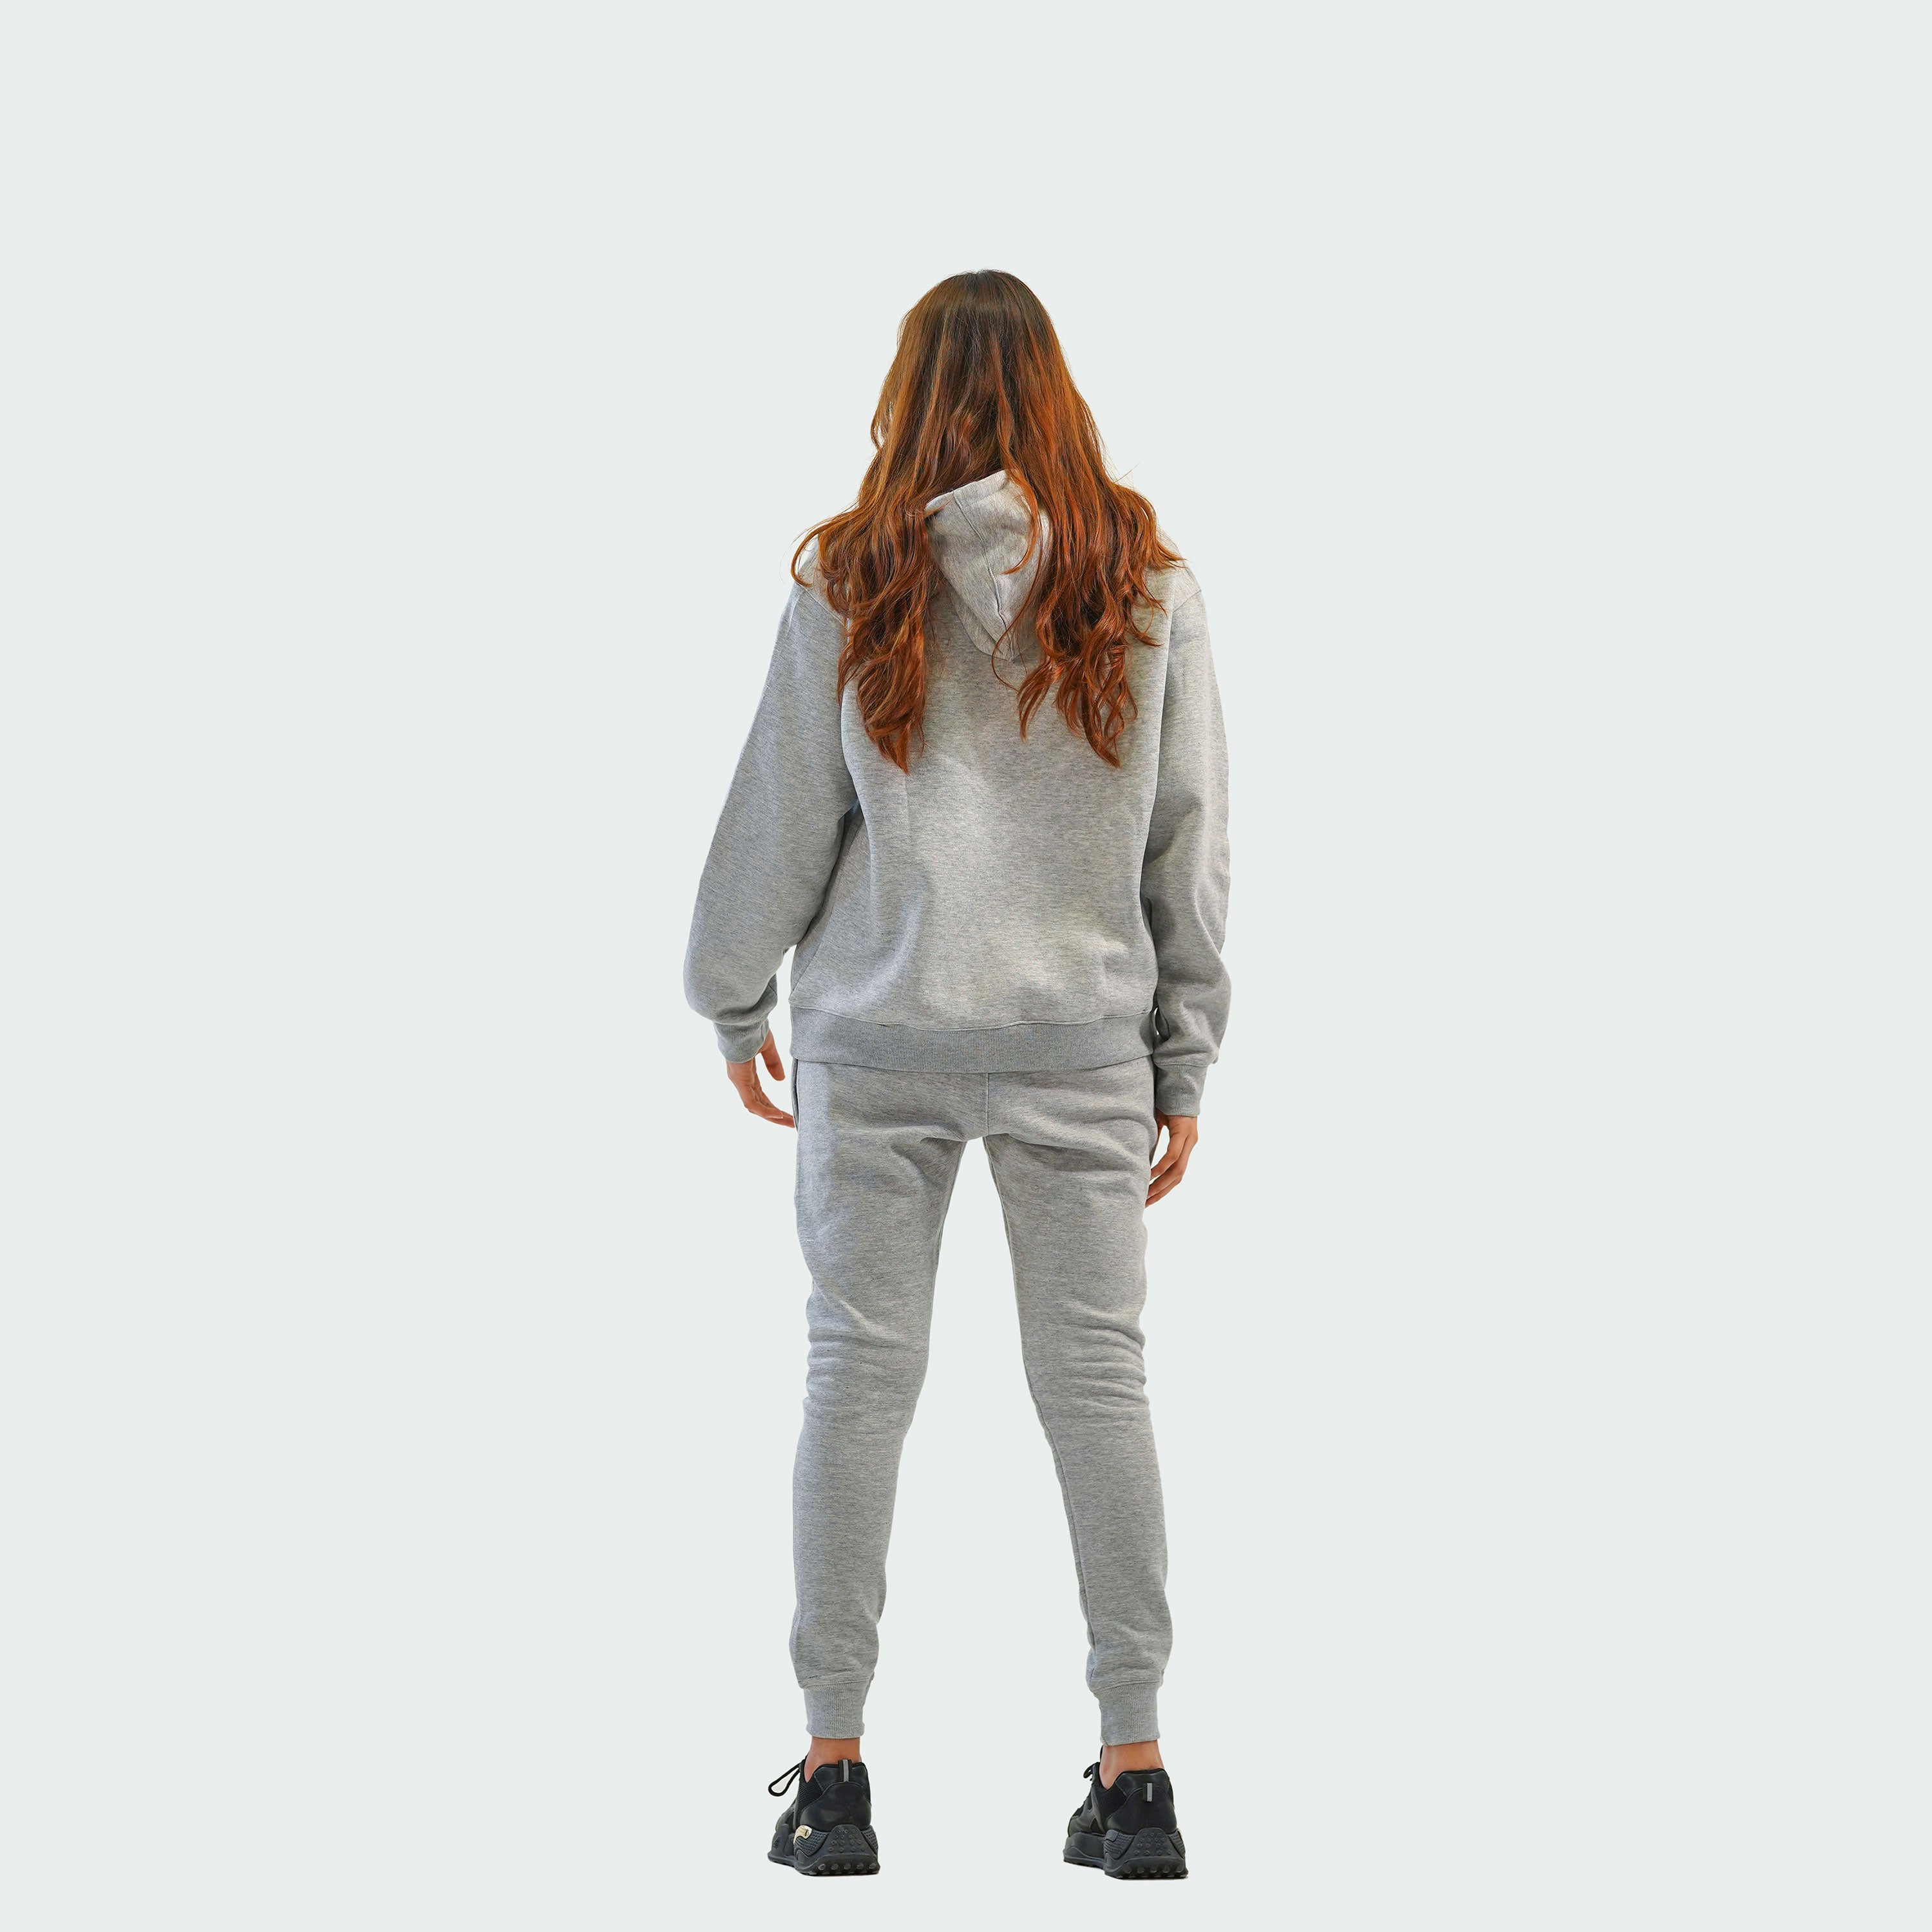 Unisex Athleisure Set  - Grey